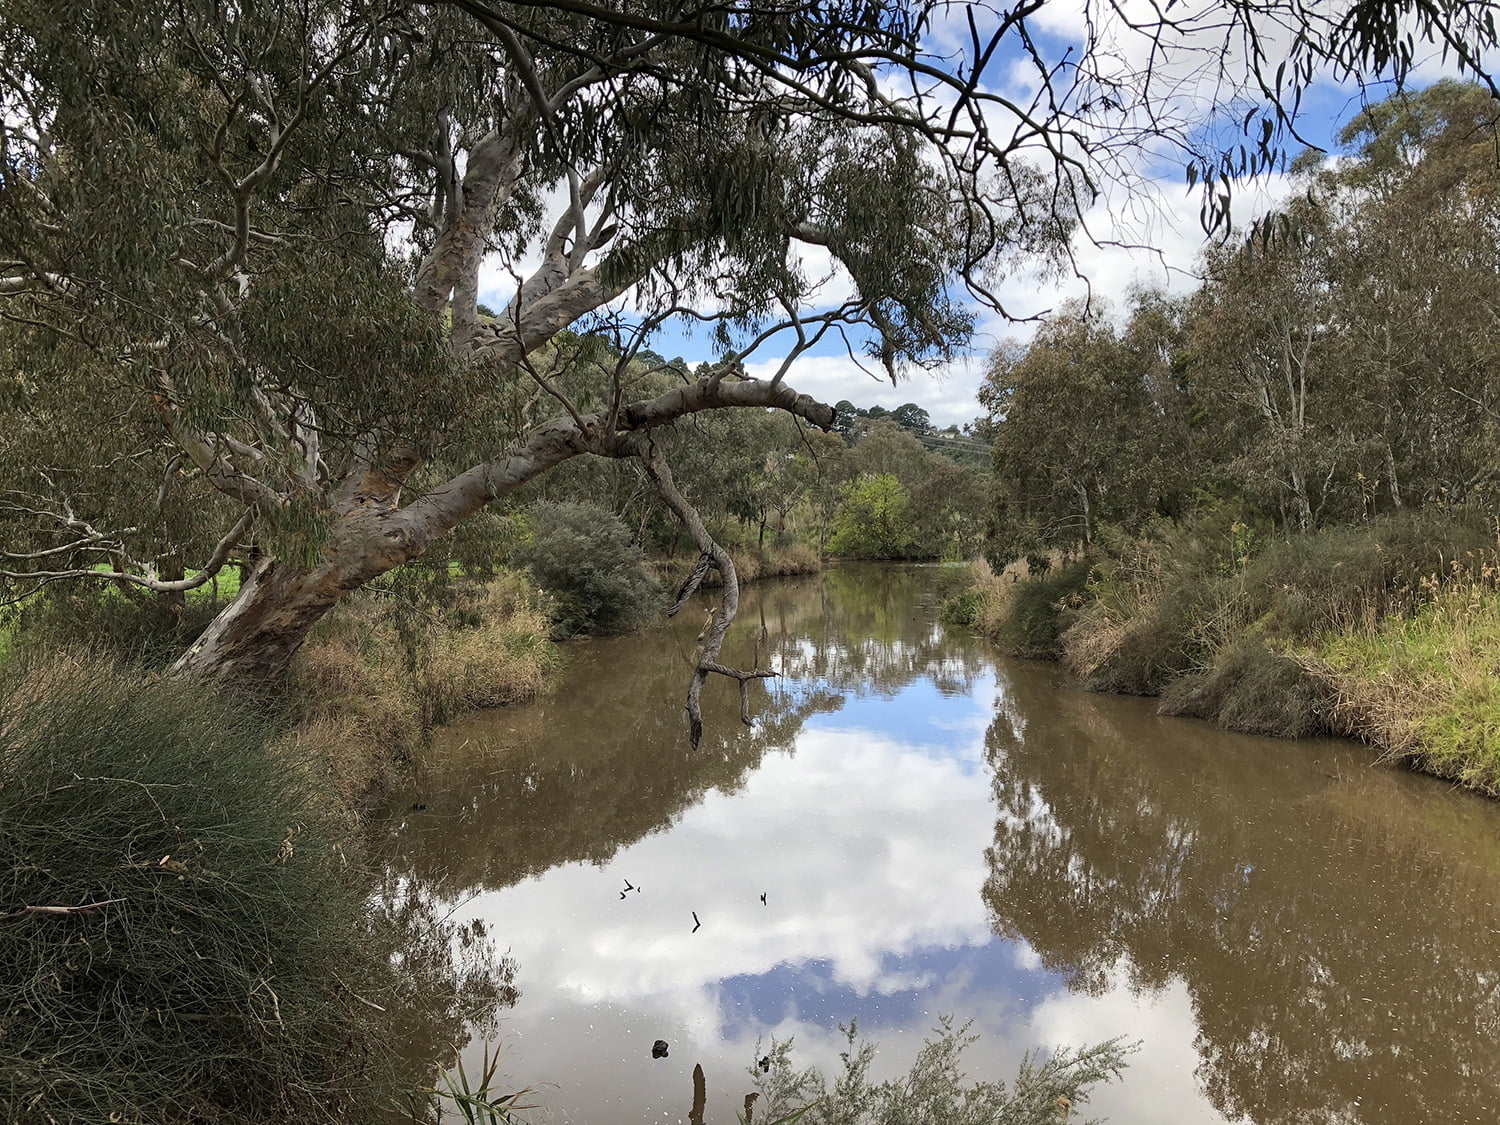 Twinning Tour of the Barwon River - View of the Barwon River through Geelong (3 Sep 2018). Photo credit: Trent Wallis